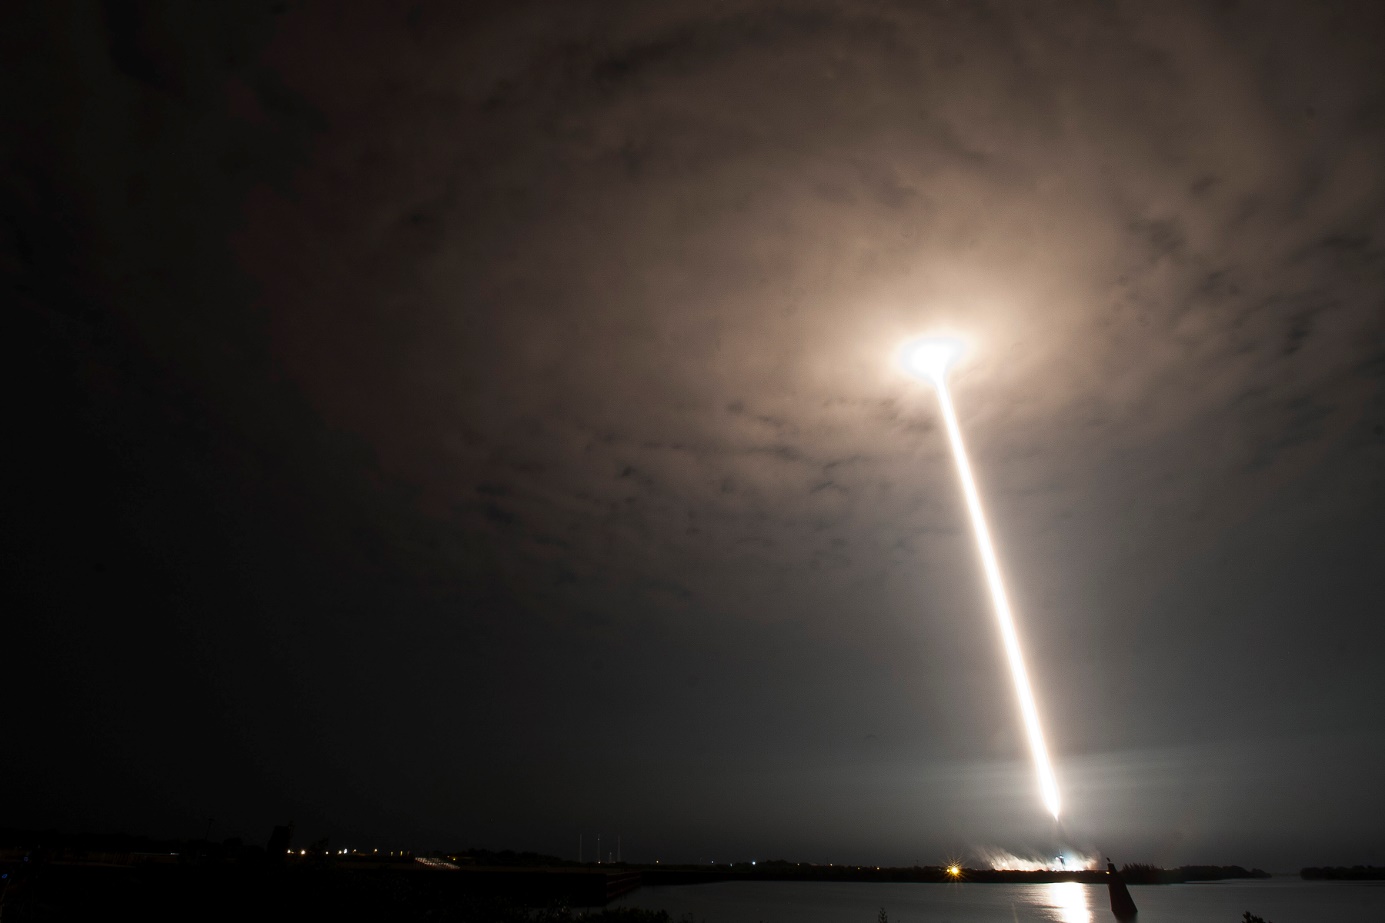 Falcon 9 Starlink 4-17 Streak Shot, Photo Courtesy Carleton Bailie, Spaceline